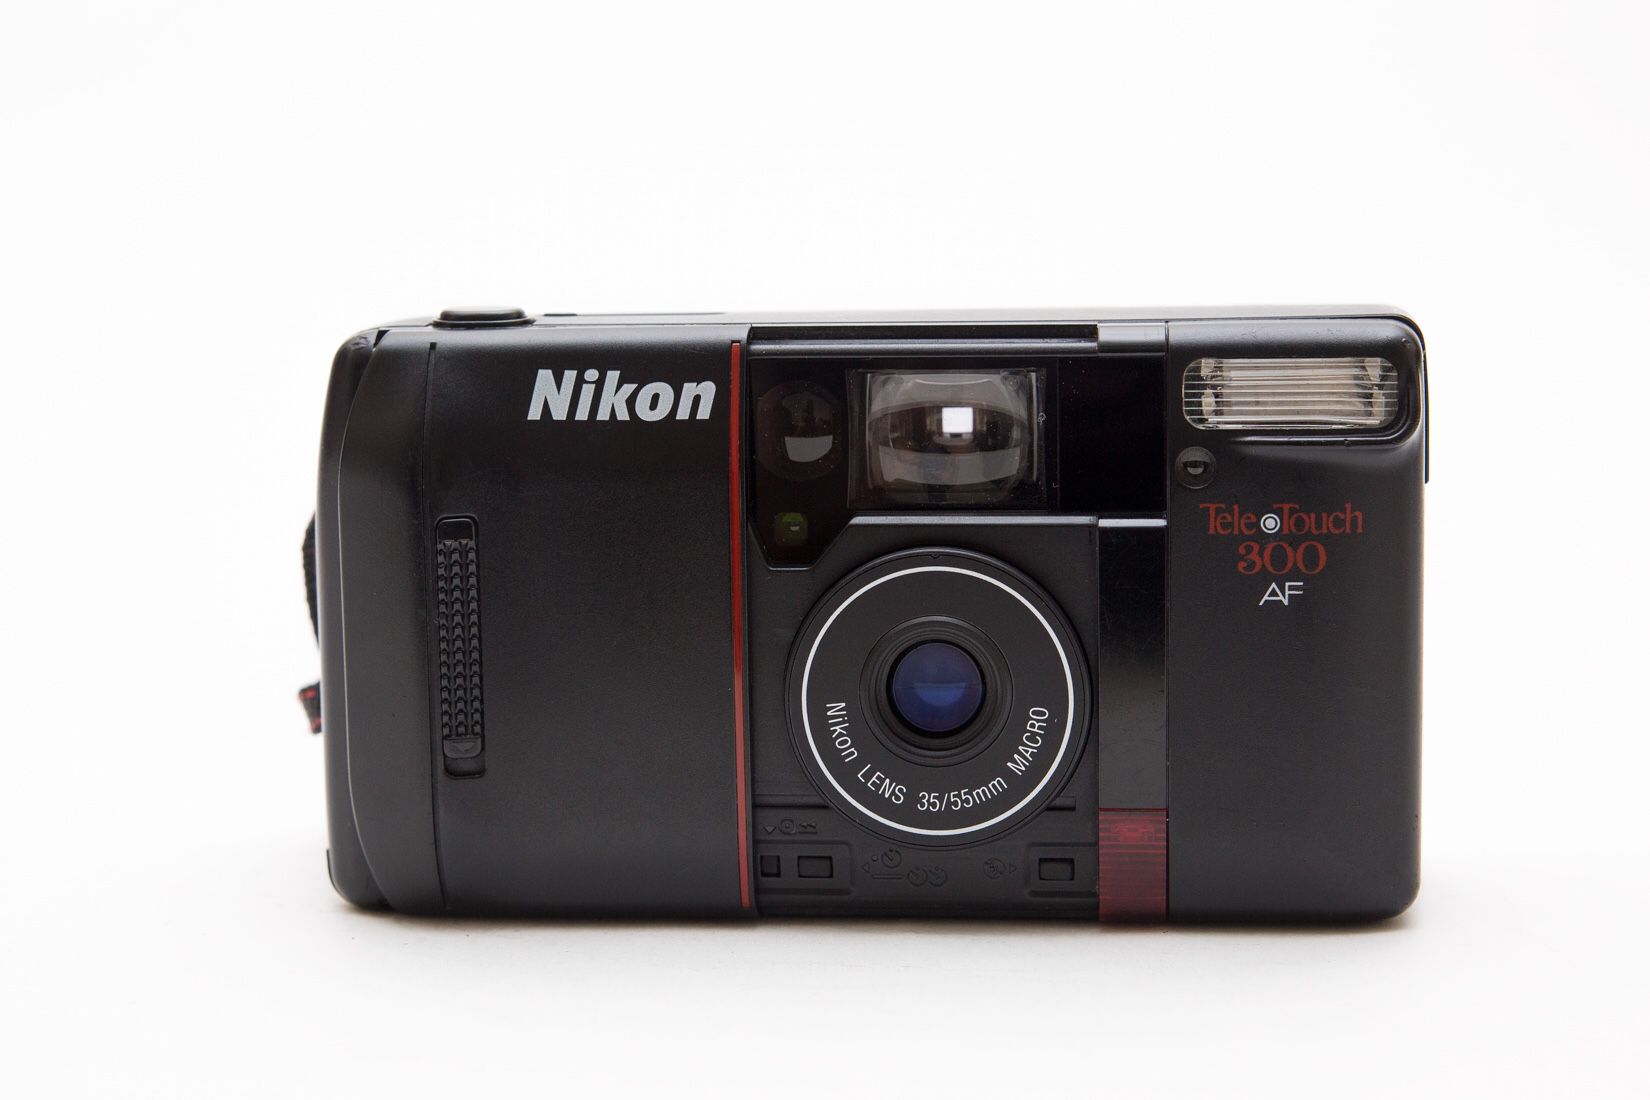 Nikon Tele Touch 300 AF 35mm Film Camera!